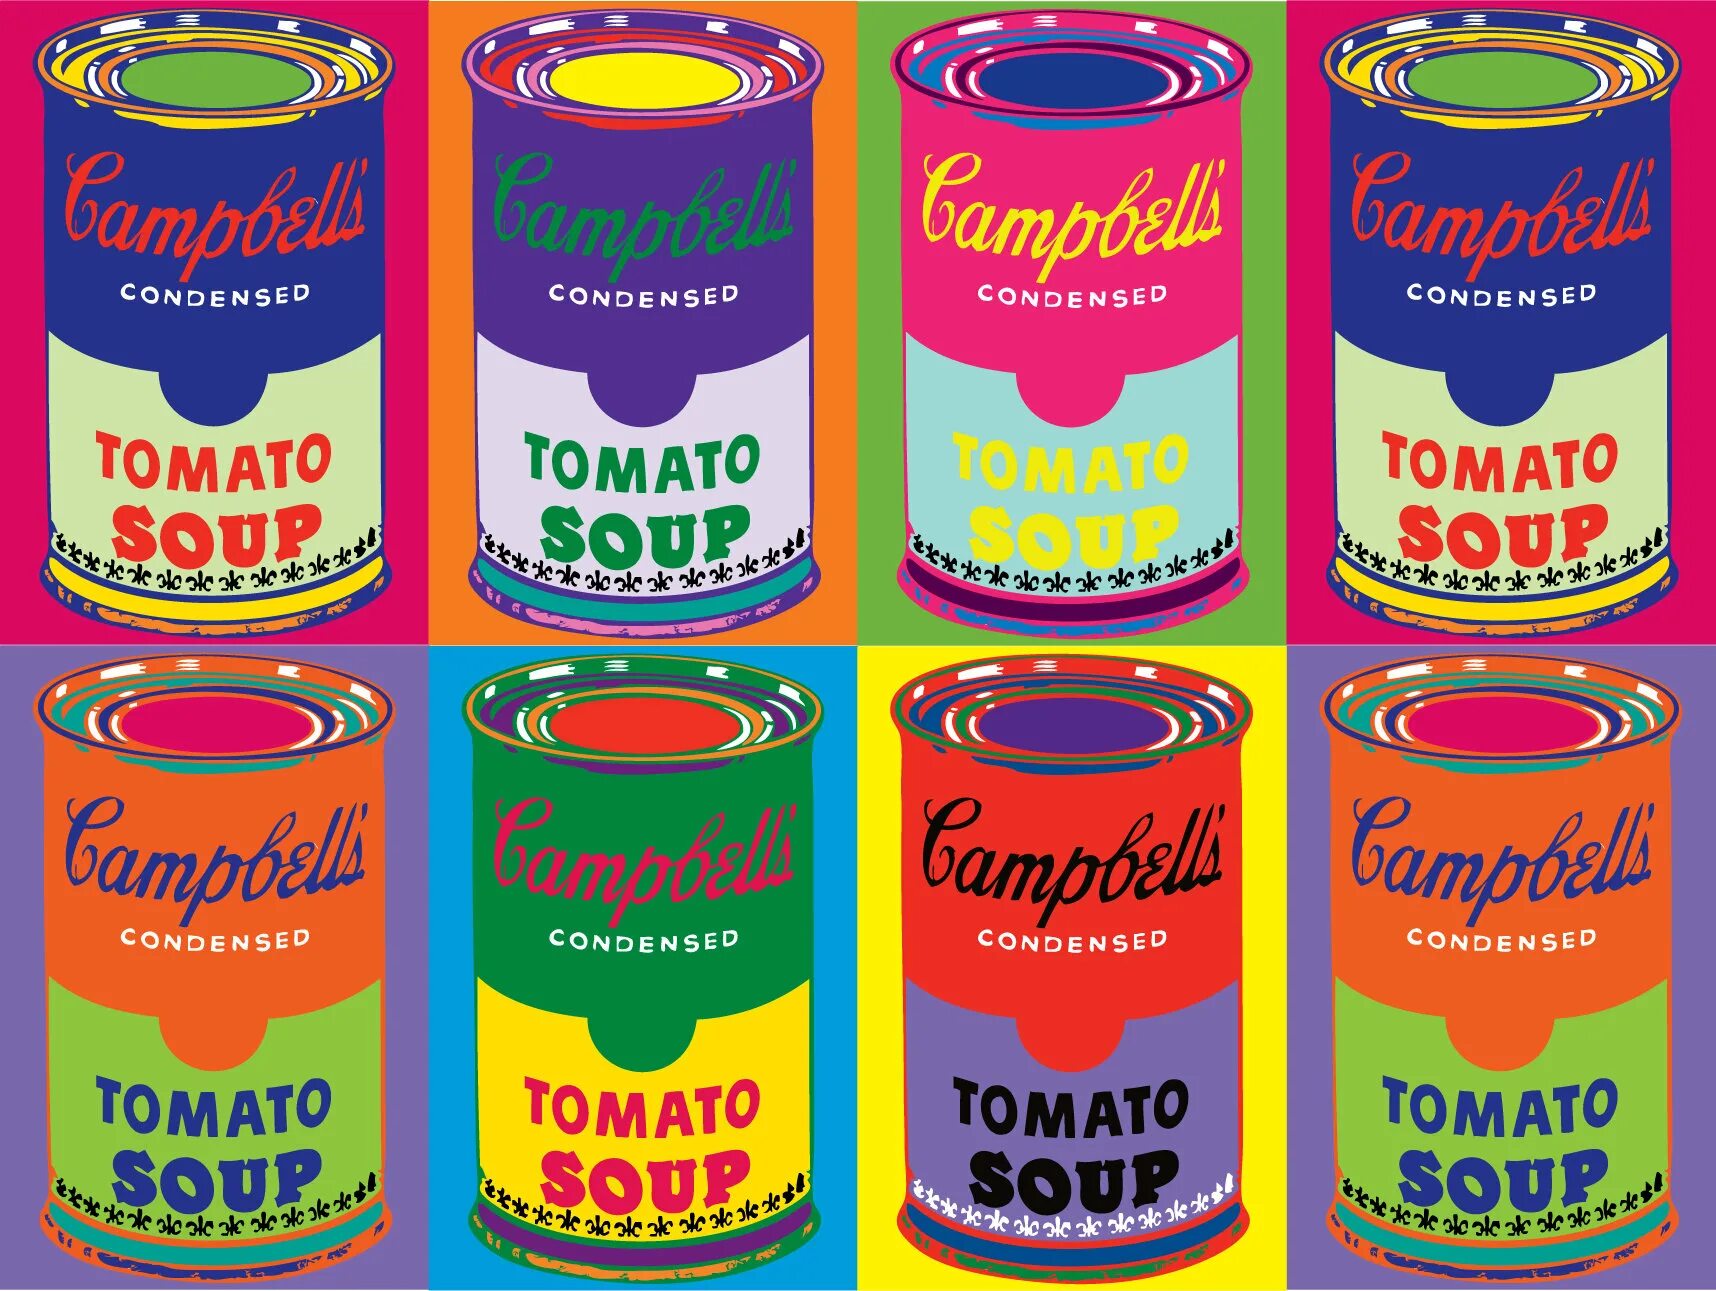 Soup cans. Энди Уорхол банка супа Кэмпбелл. Энди Уорхол картины суп. Поп-арт Энди Уорхол банки супа. Картина Энди Уорхола банка.